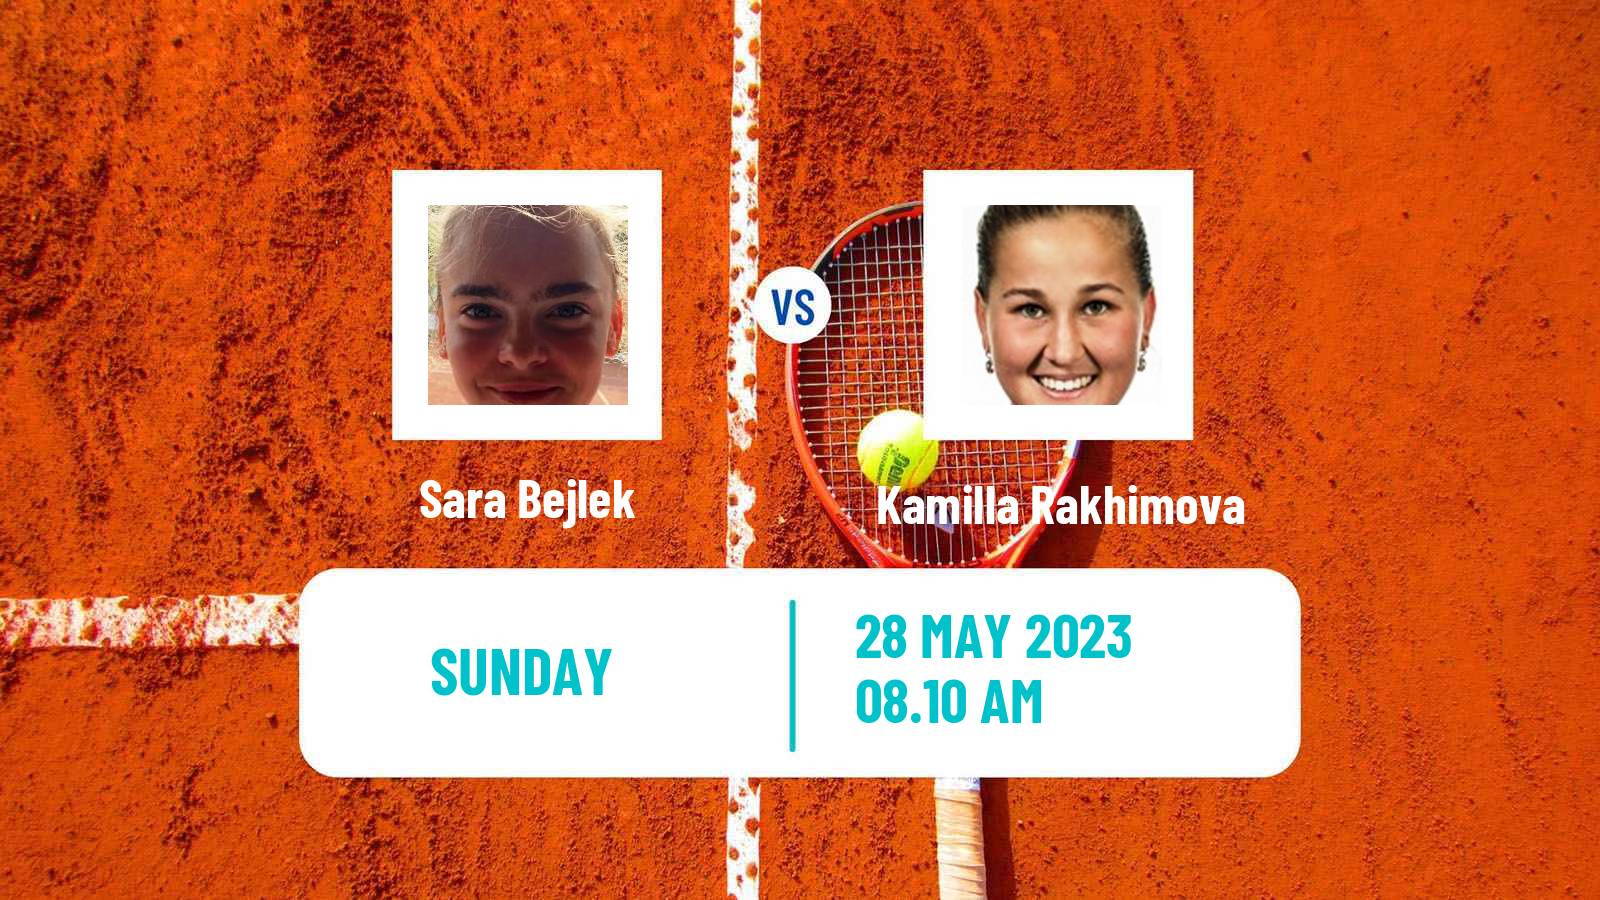 Tennis WTA Roland Garros Sara Bejlek - Kamilla Rakhimova